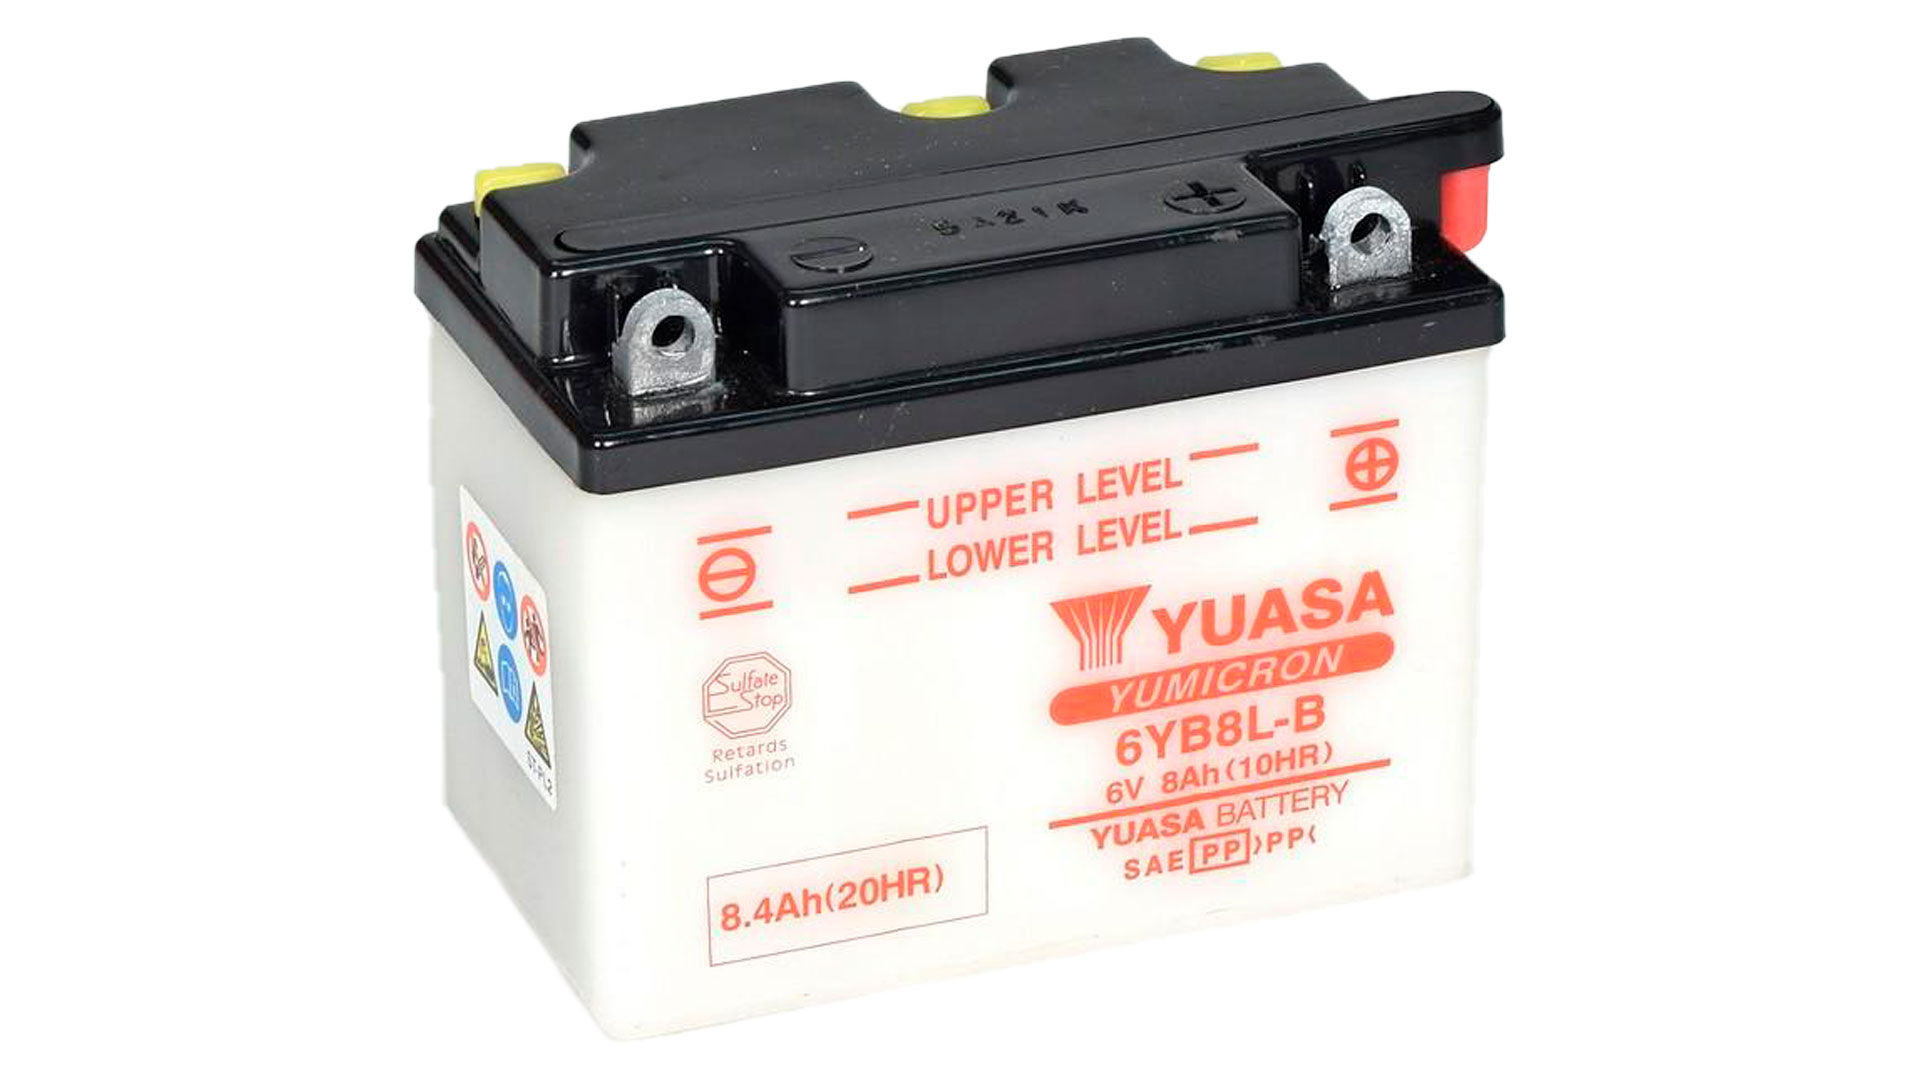  6YB8L-B (DC) 6V Yuasa Conventional Battery 